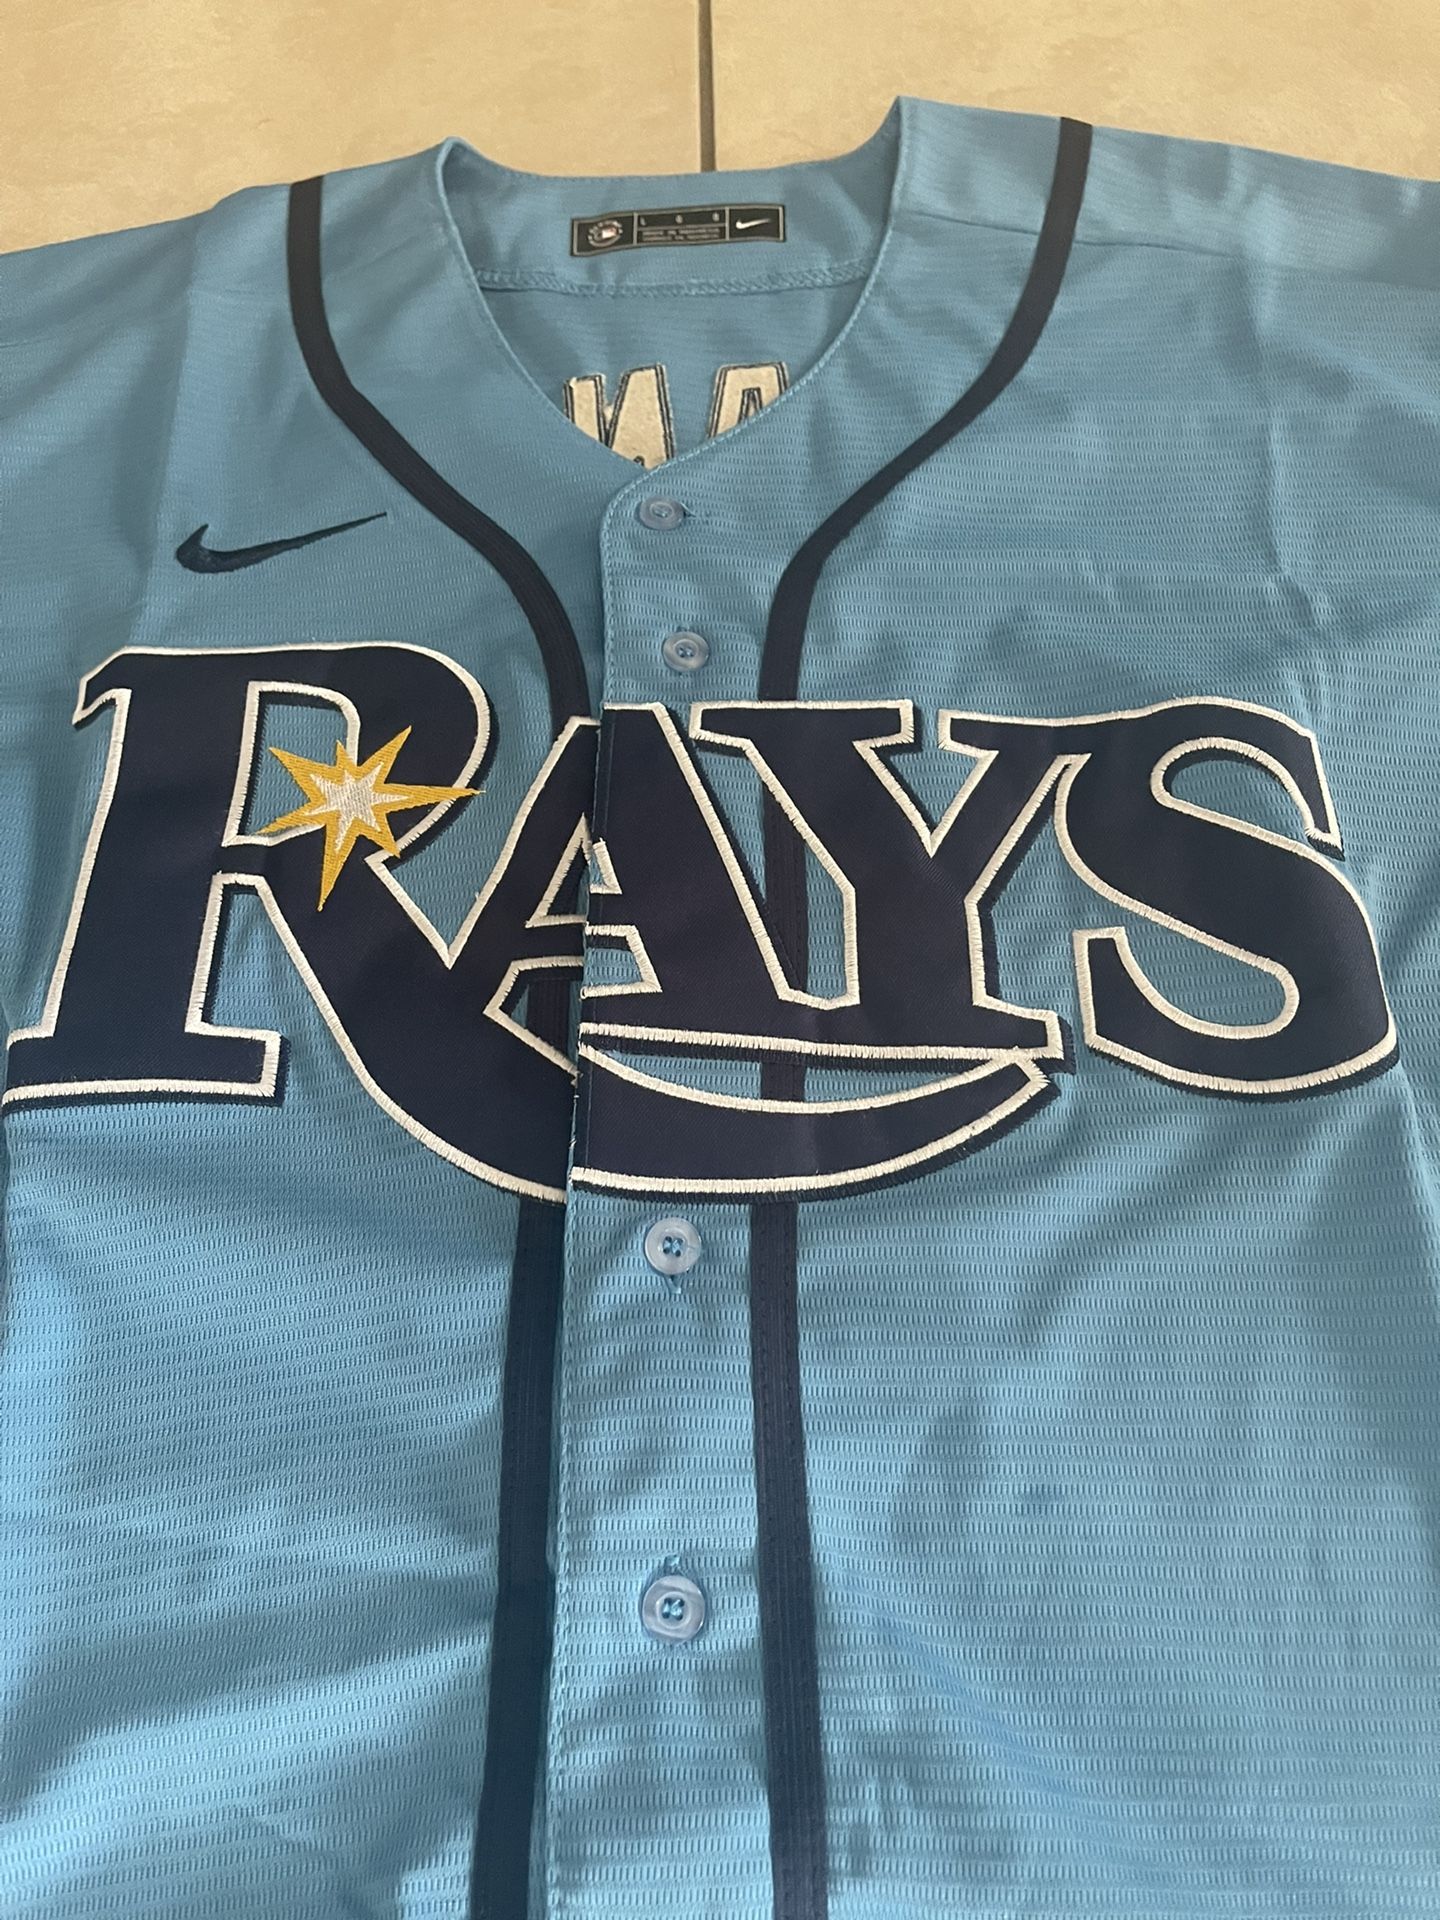 rays blue jersey